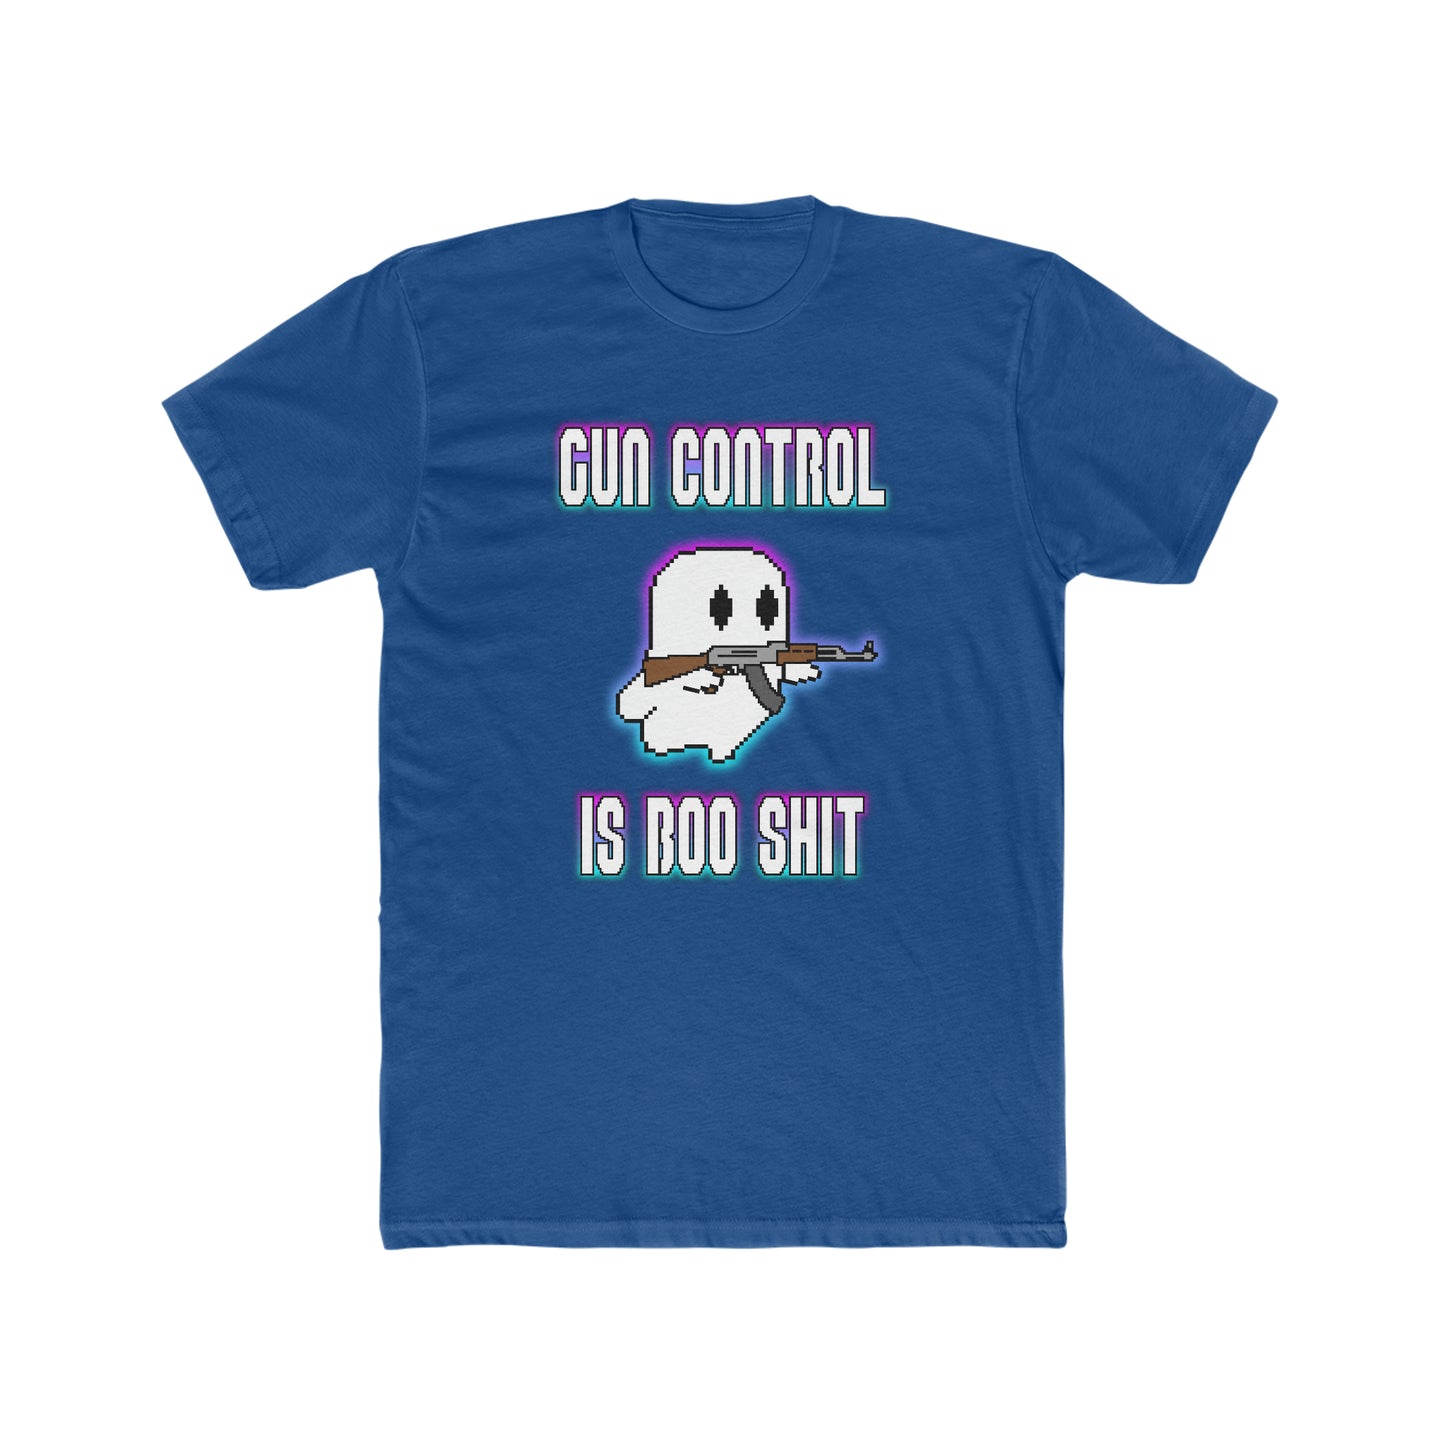 "Gun Control" Men's Cotton Crew Tee